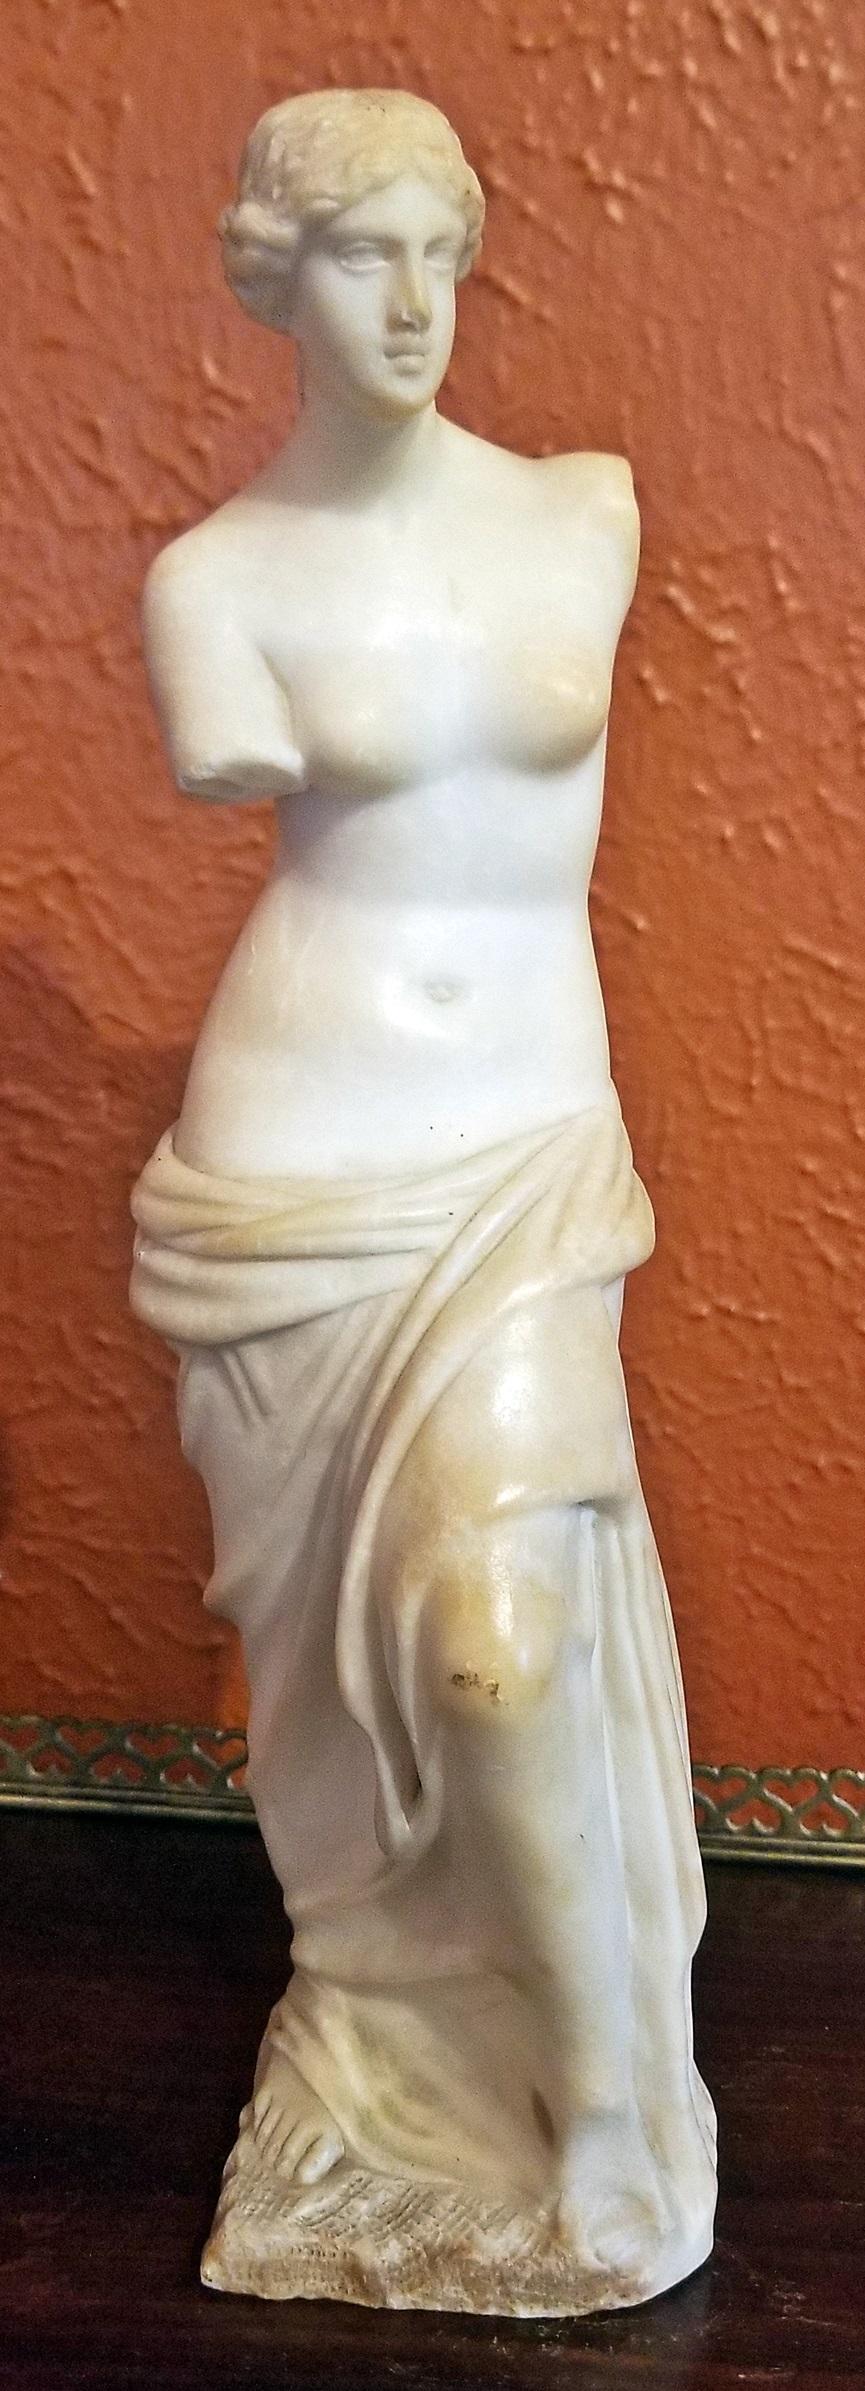 Neoclassical Revival 19th century Italian Marble Figurine of Venus De Milo